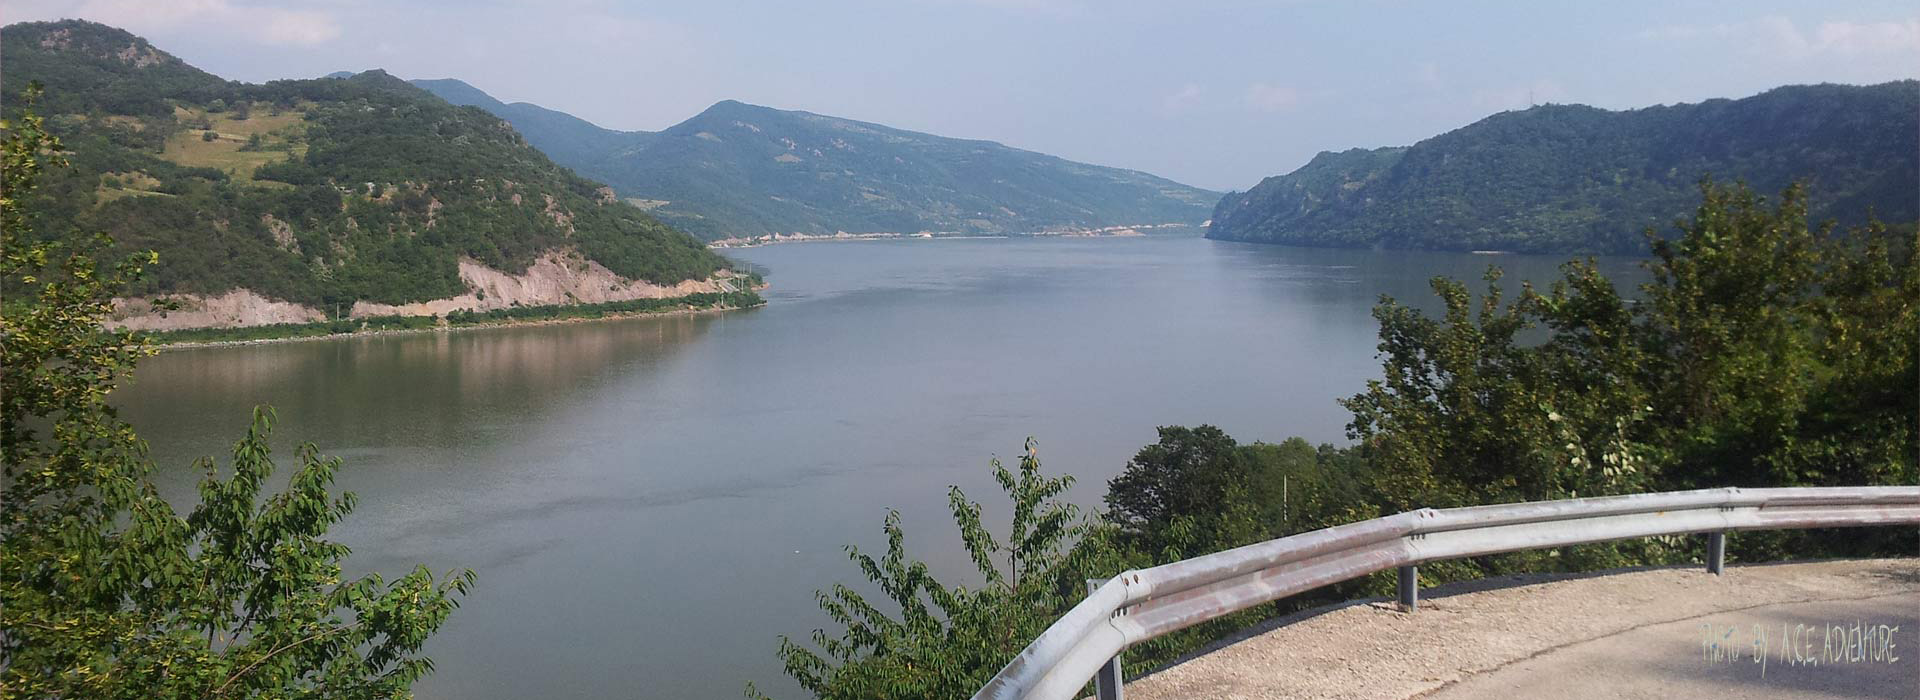 Danube Self-Guided Cycling Holiday - Danube